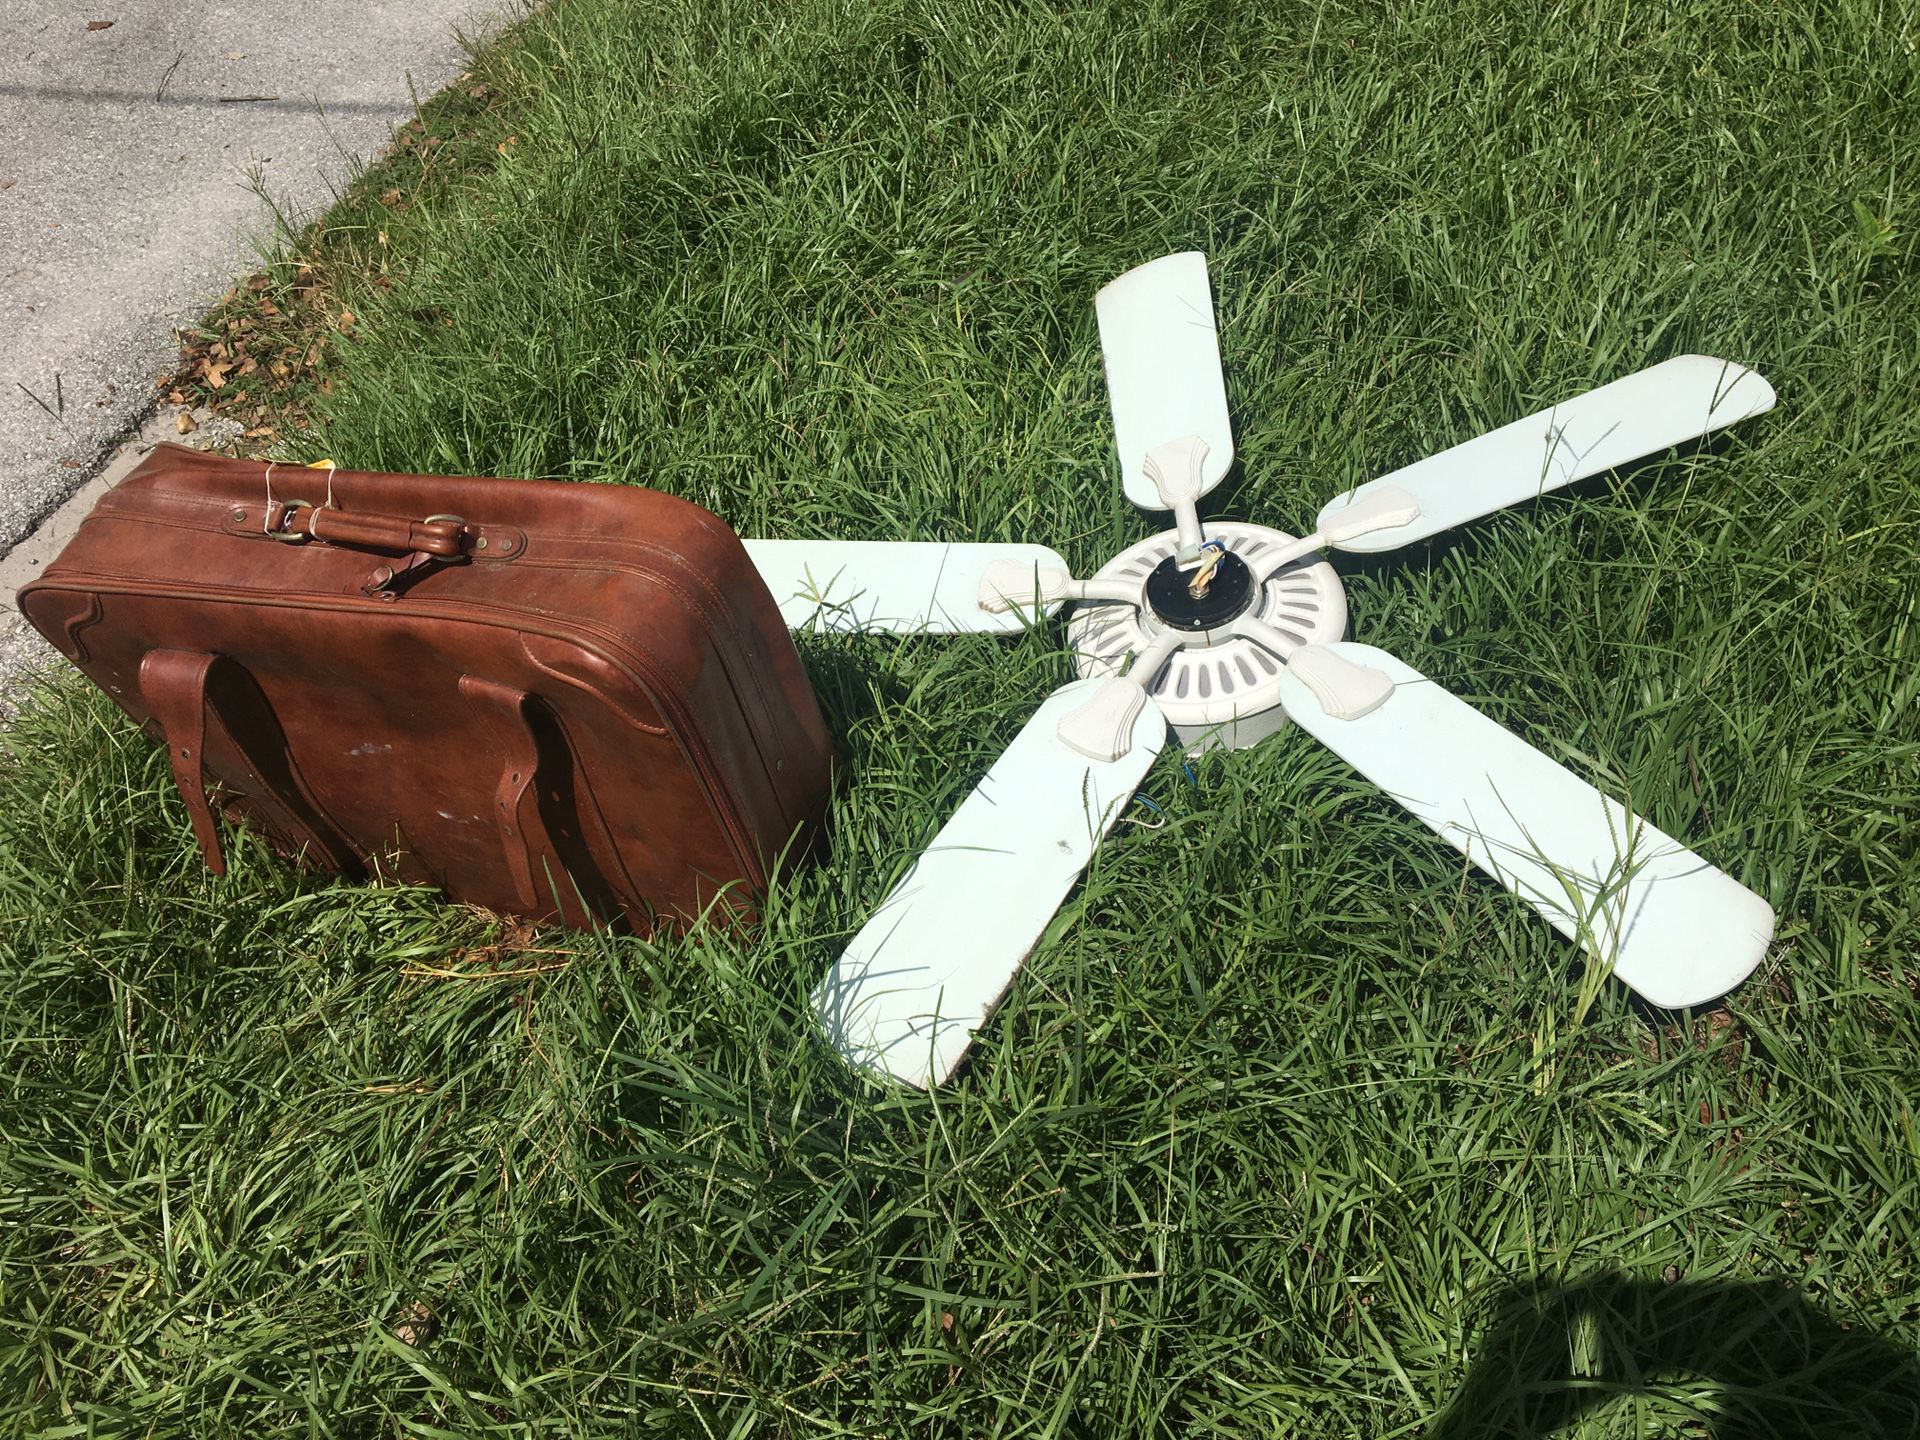 Curb alert: FREE ceiling fan, suitcase